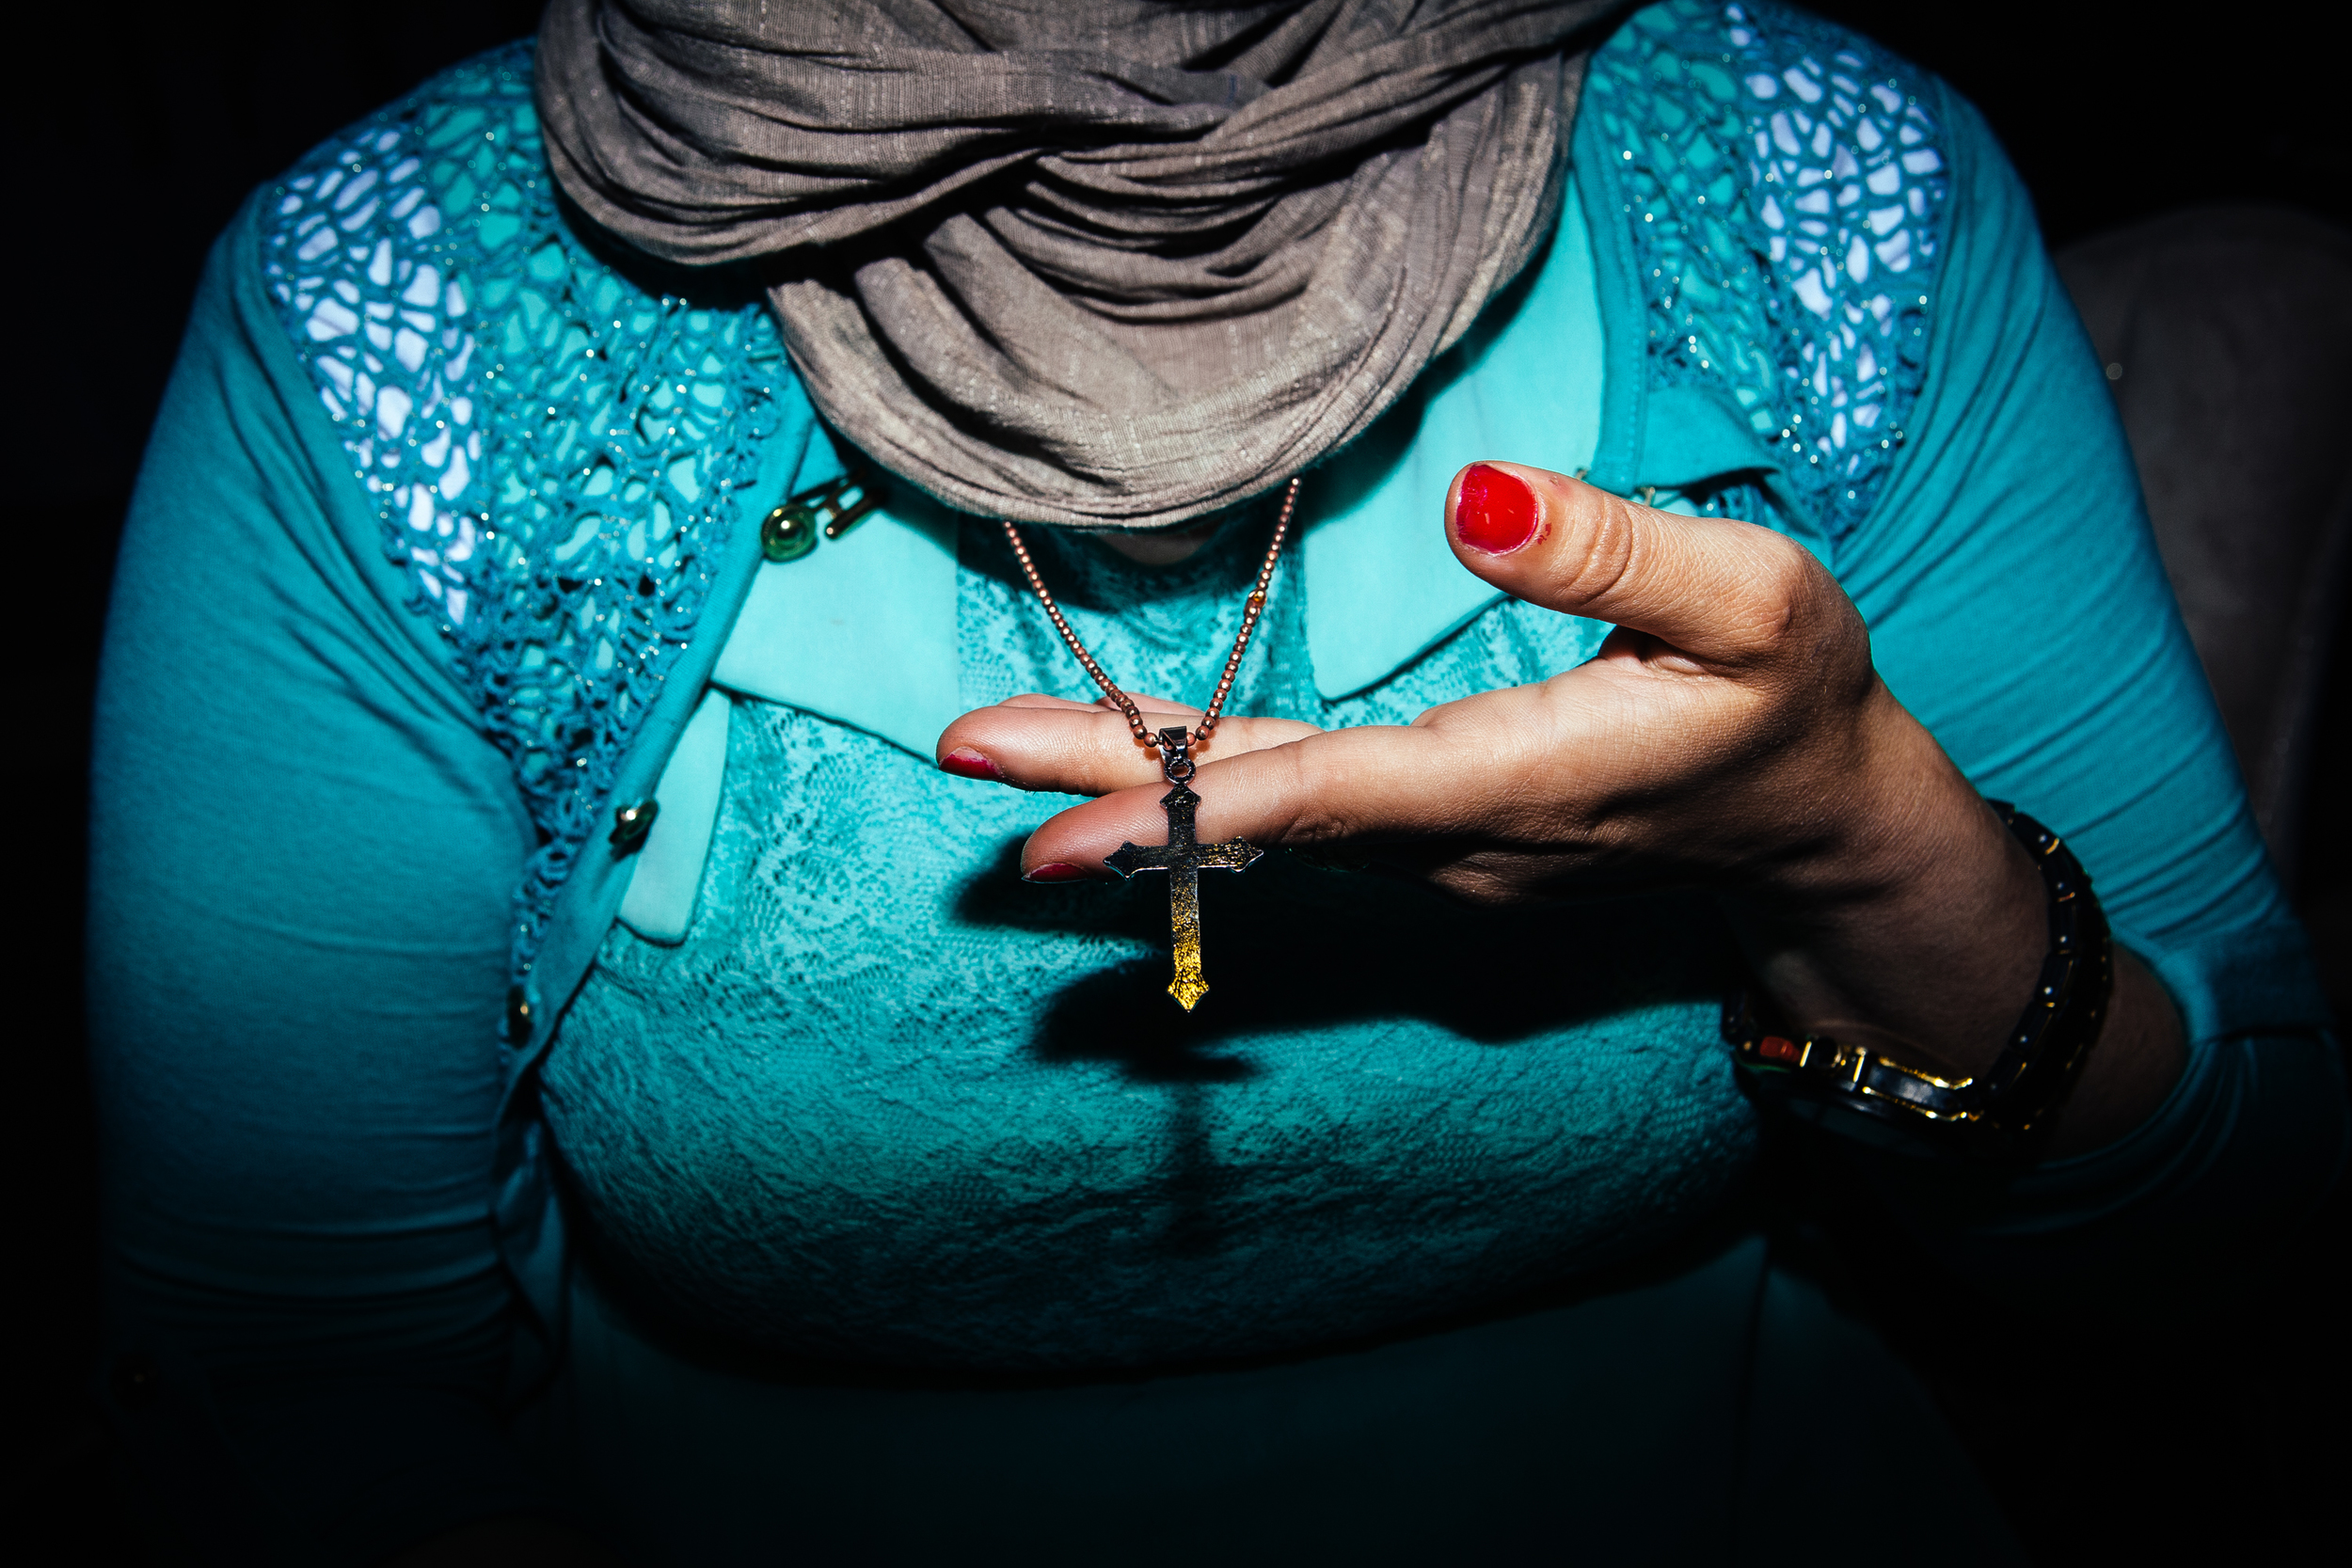  An Assyrian Christian woman shows her cross necklace at a Christian revival in Dohuk, Northern Iraqi Kurdistan.&nbsp; 